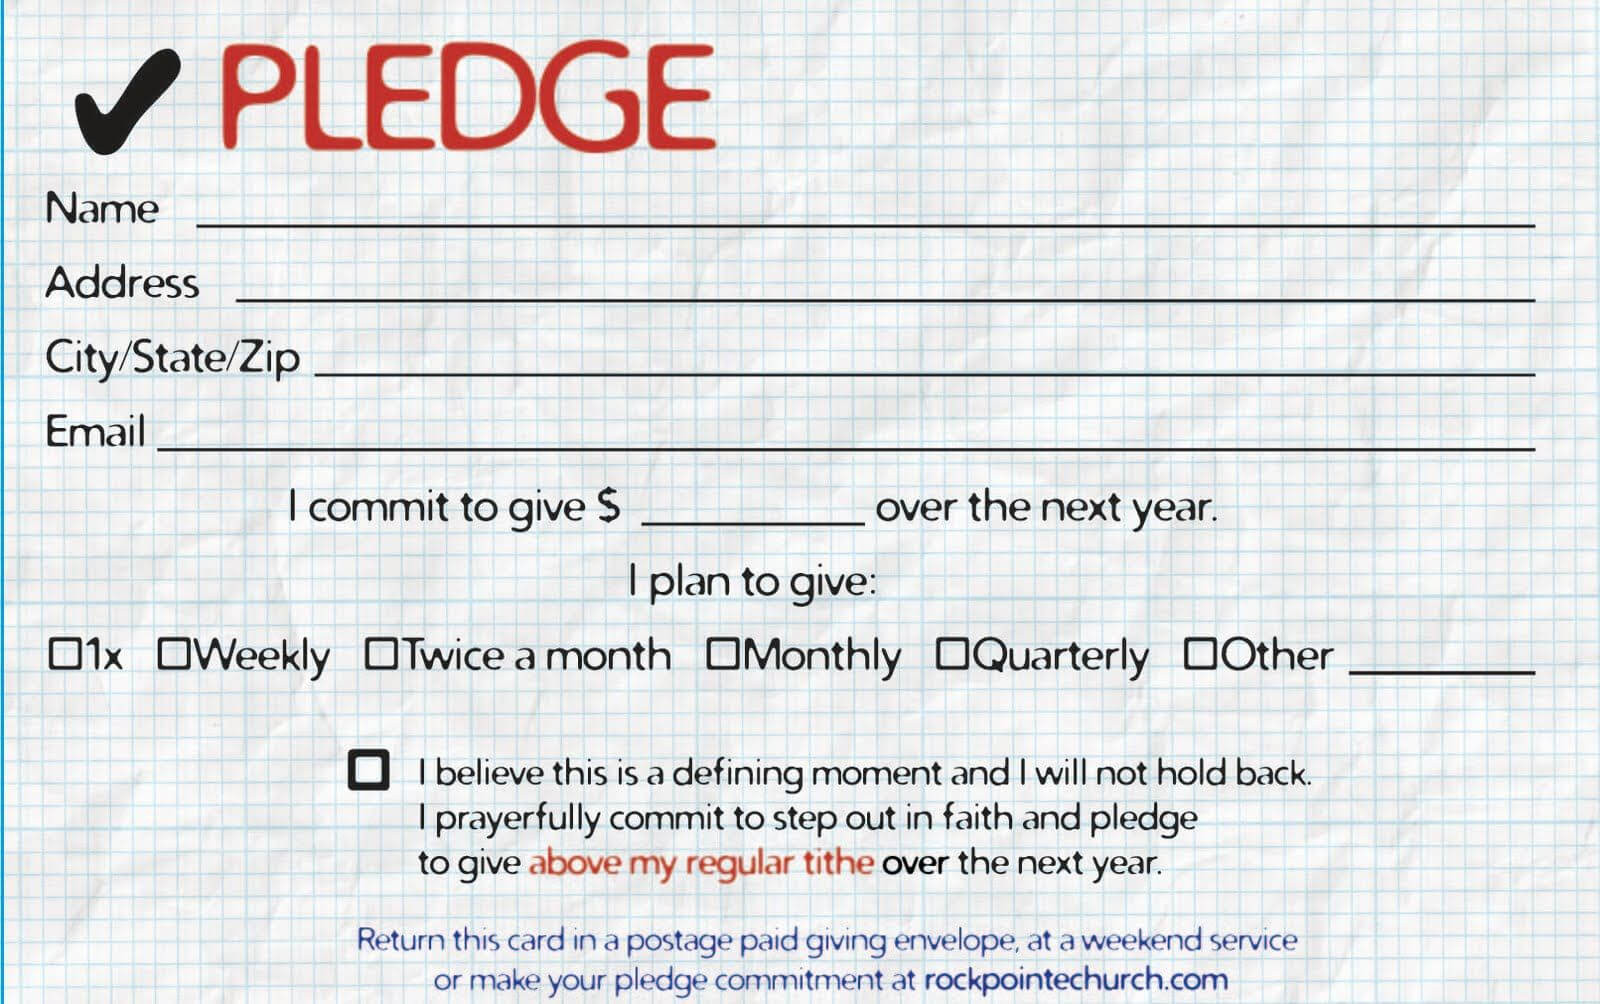 Pledge Cards For Churches | Pledge Card Templates | Card With Church Pledge Card Template